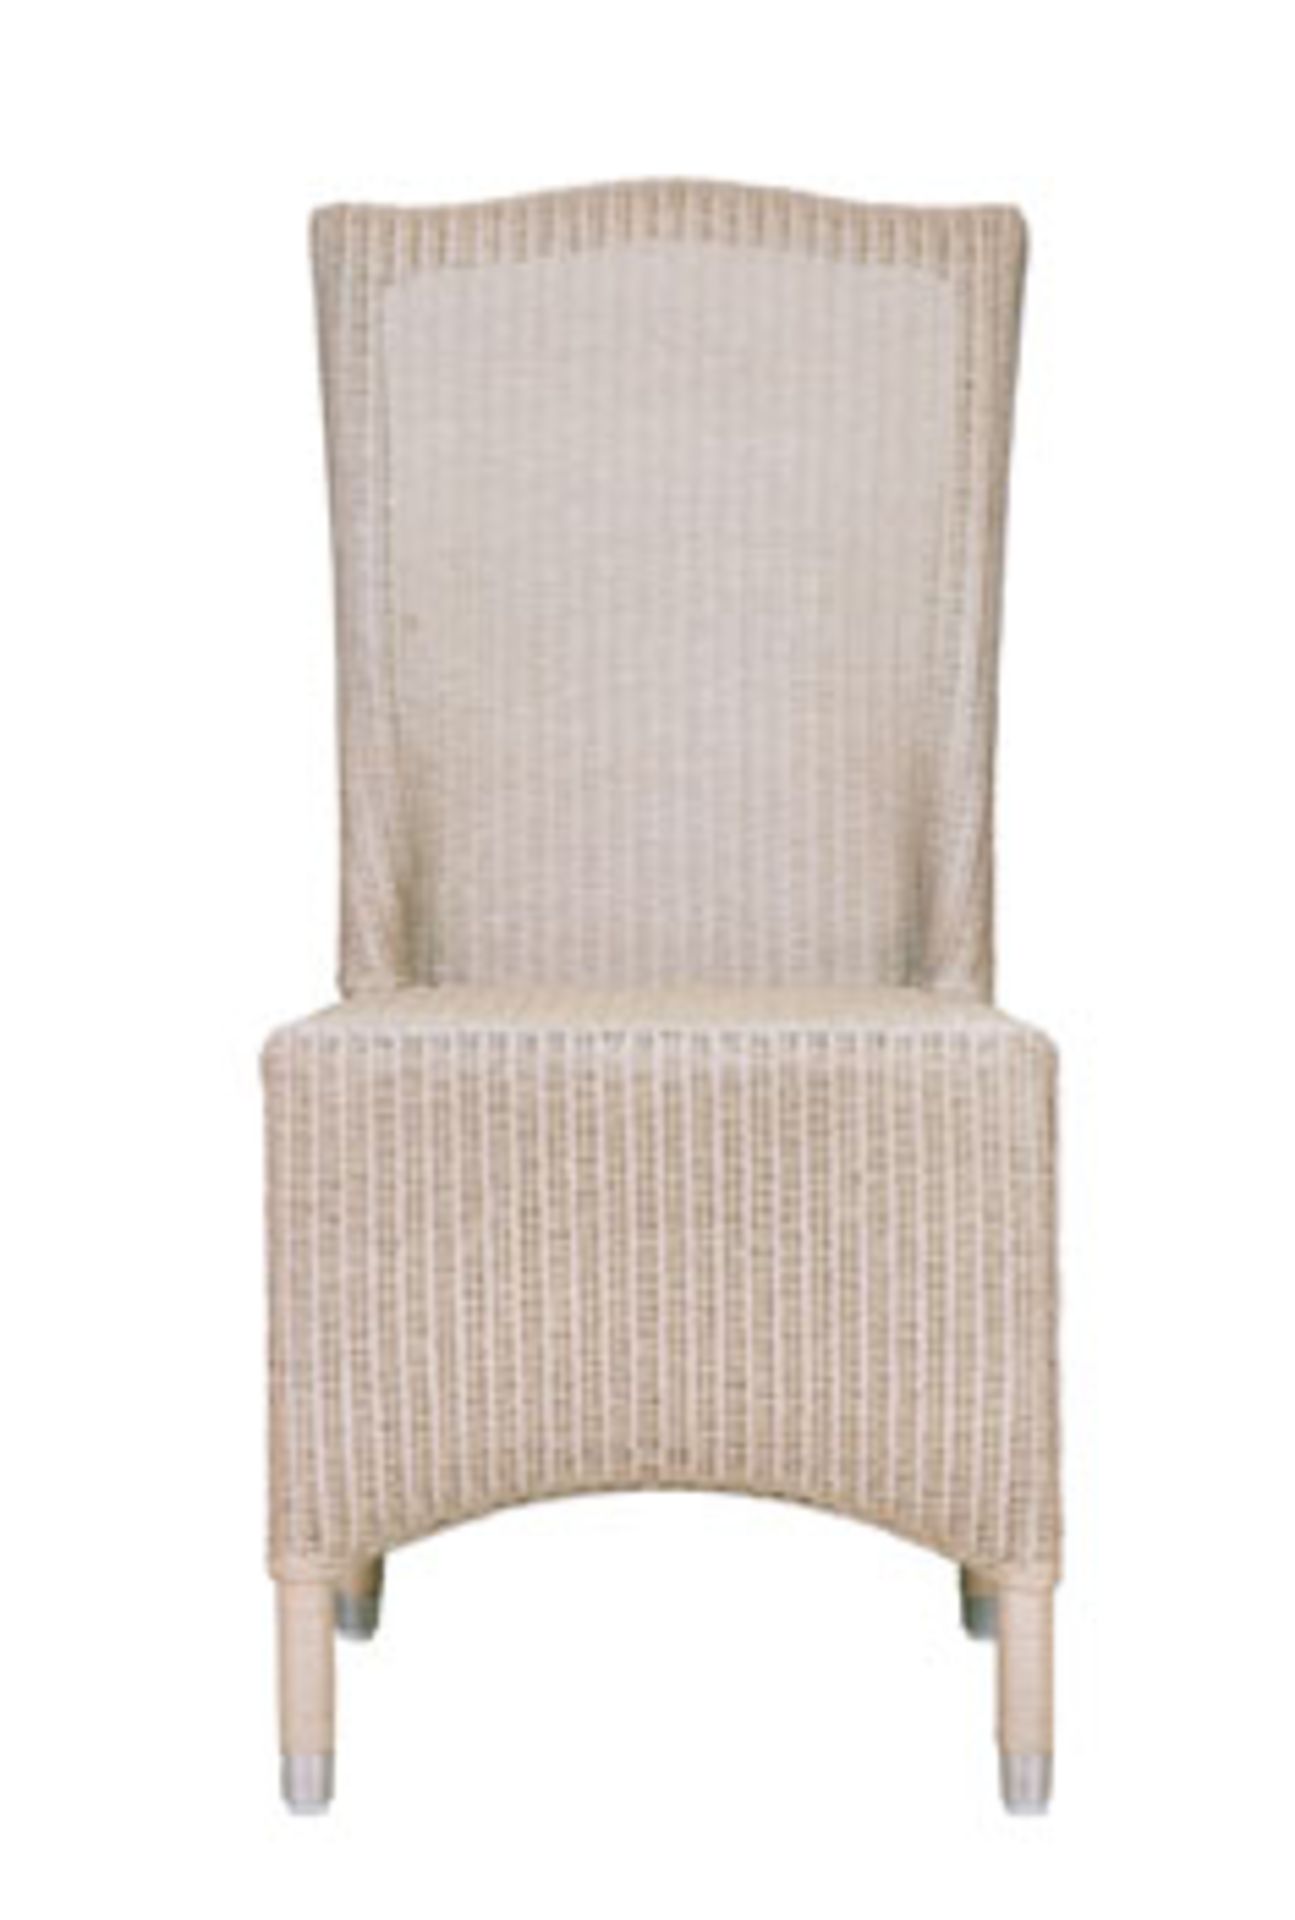 A Pair of Classic LLoyd Loom Chairs Canvas 40 x 60 x 100cm (Loc OAL01C)